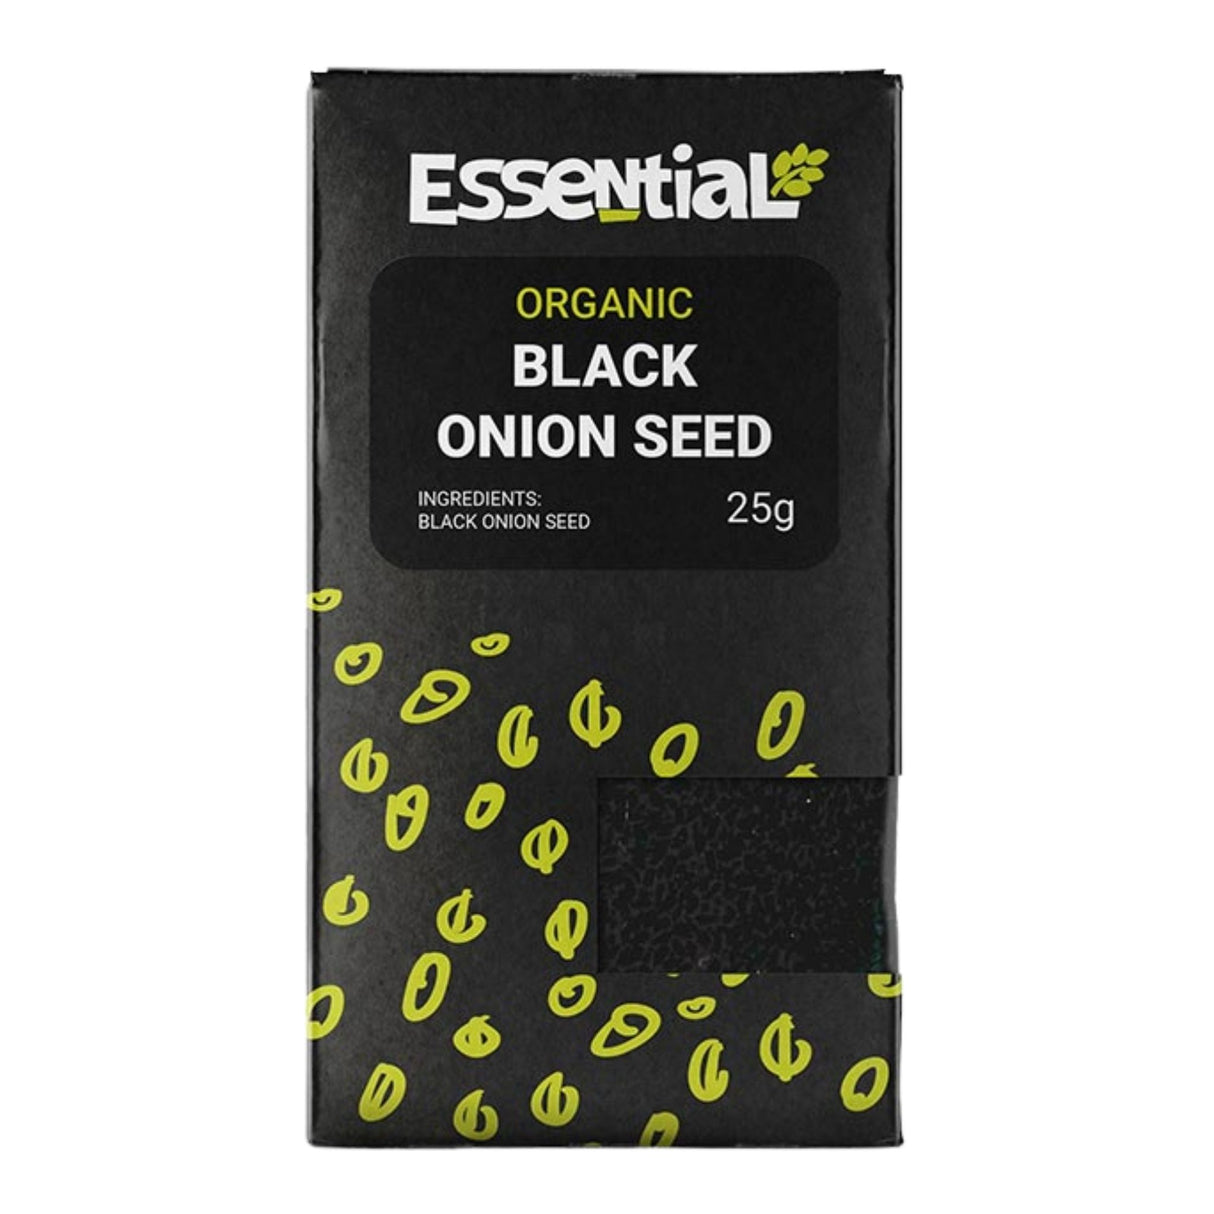 Essential Black Onion Seed 25g